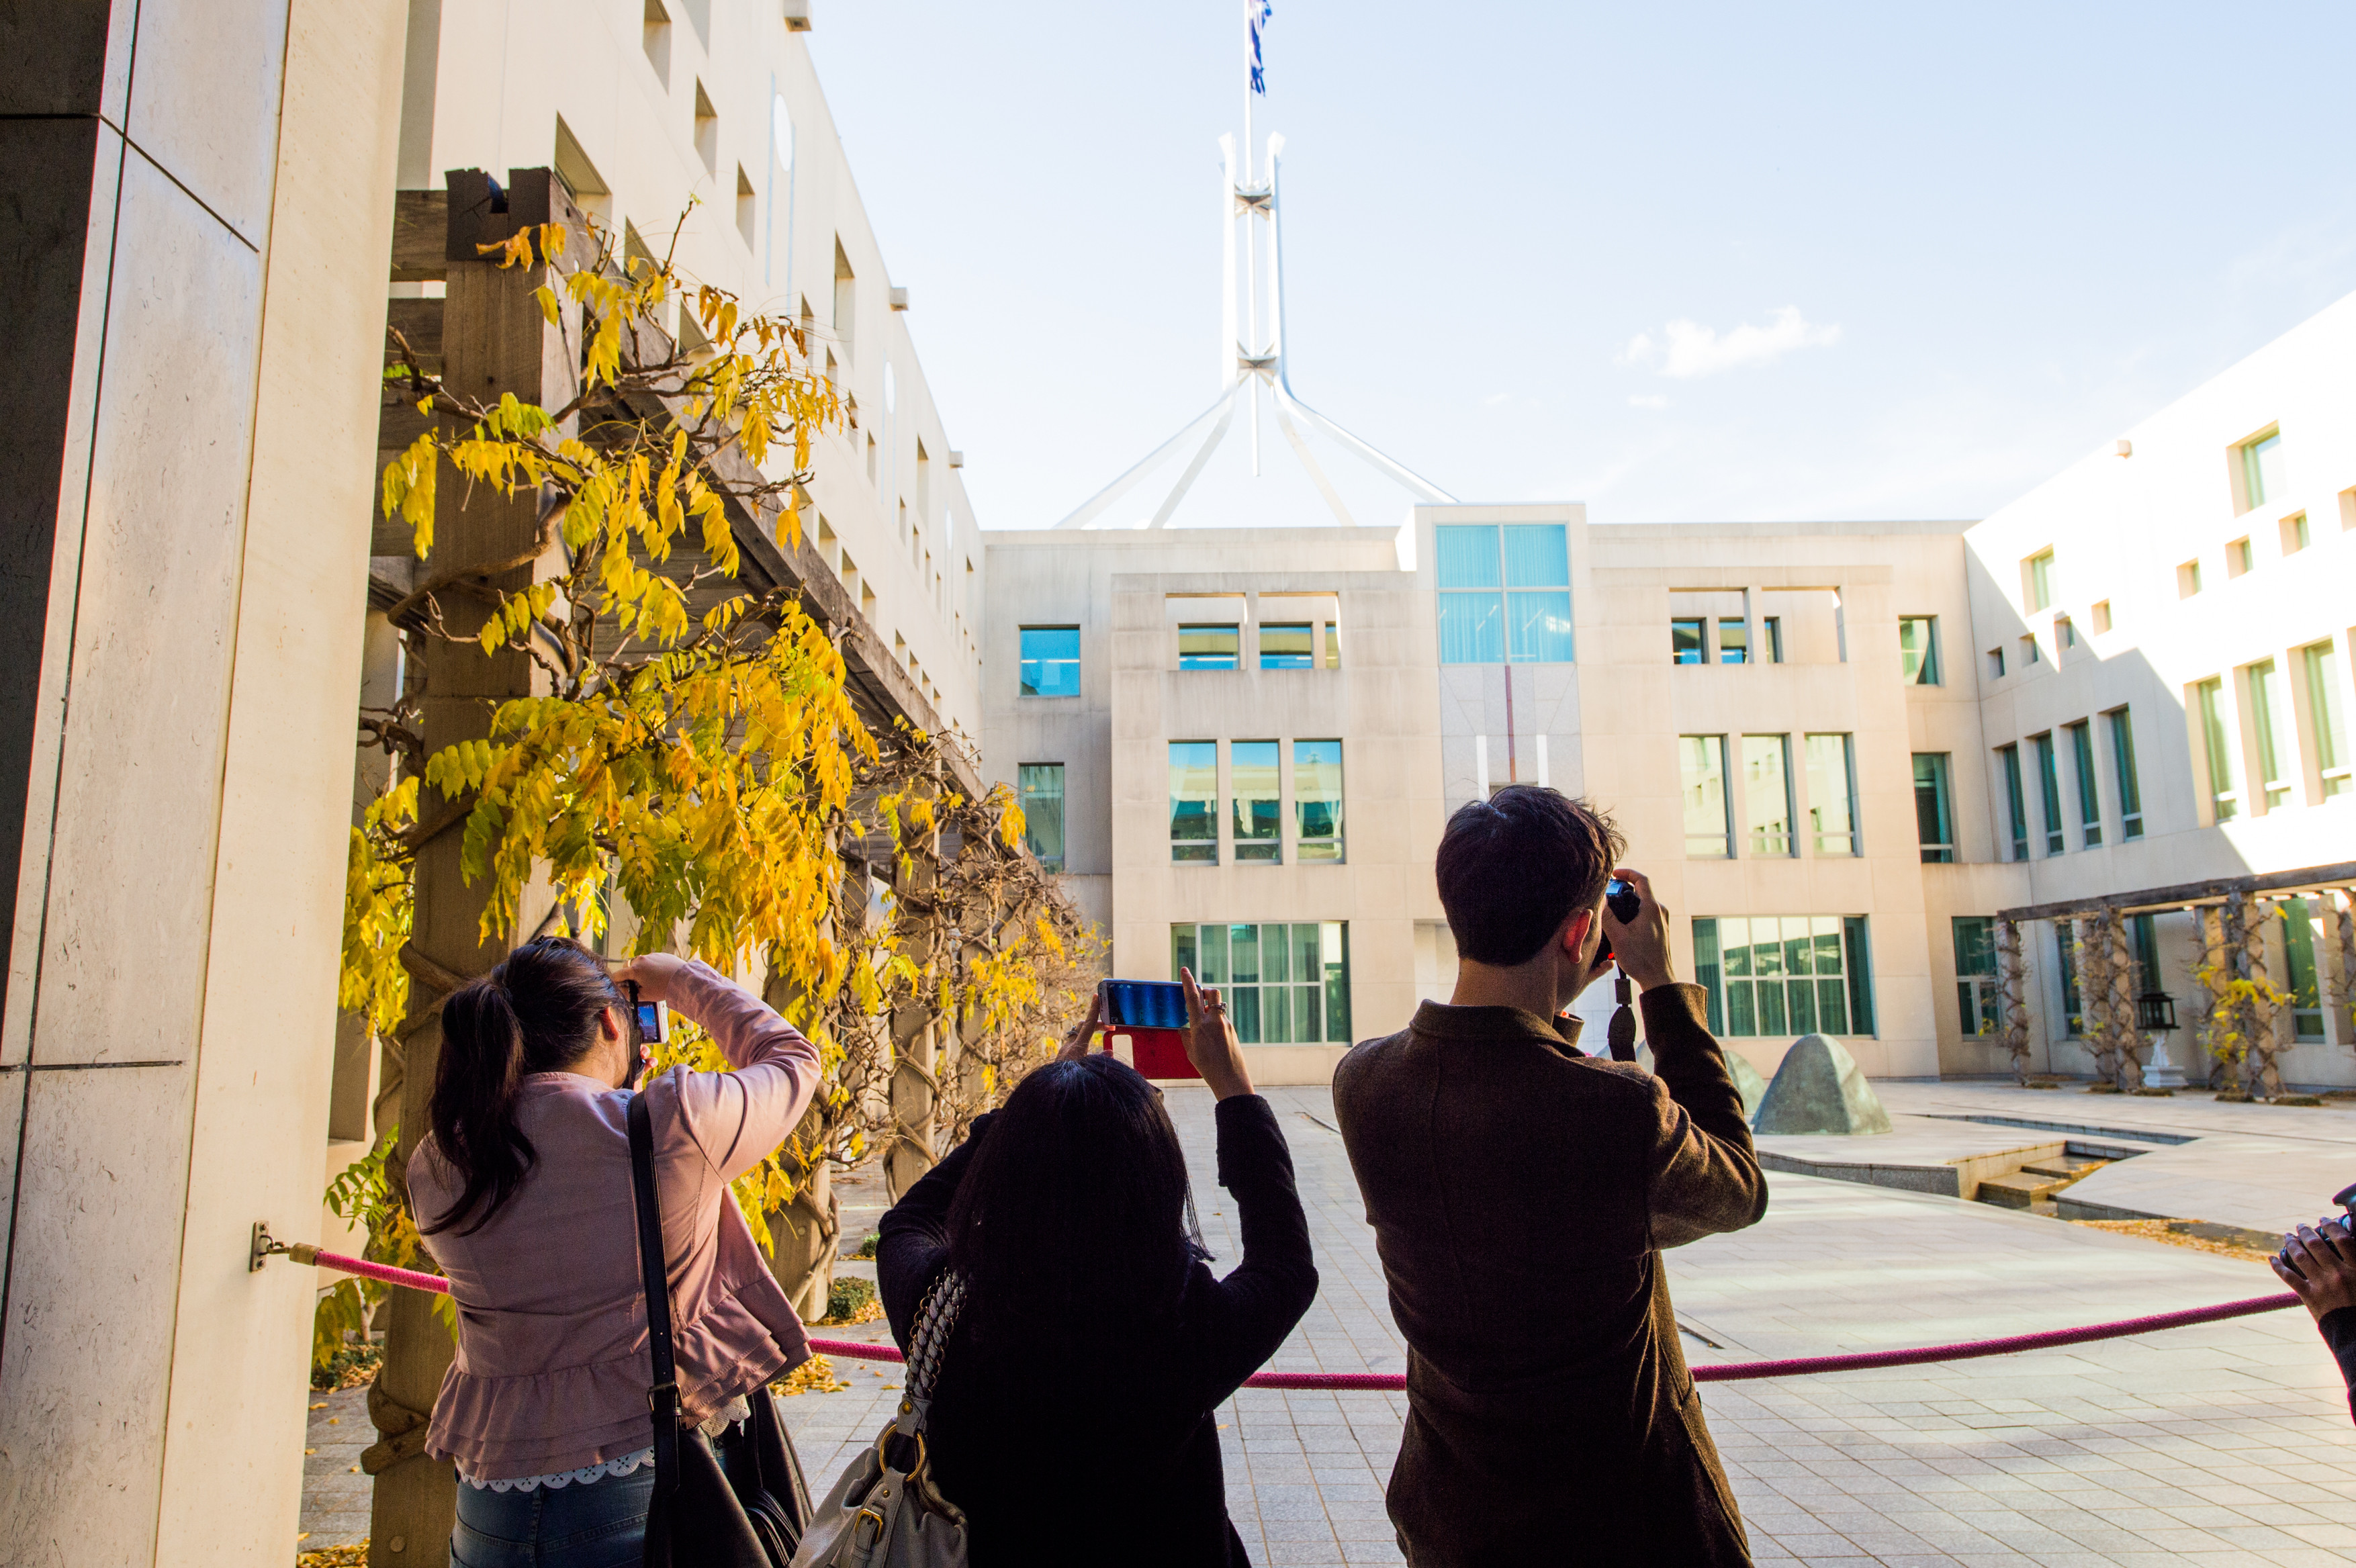 Image: Parliament House Canberra © VisitCanberra